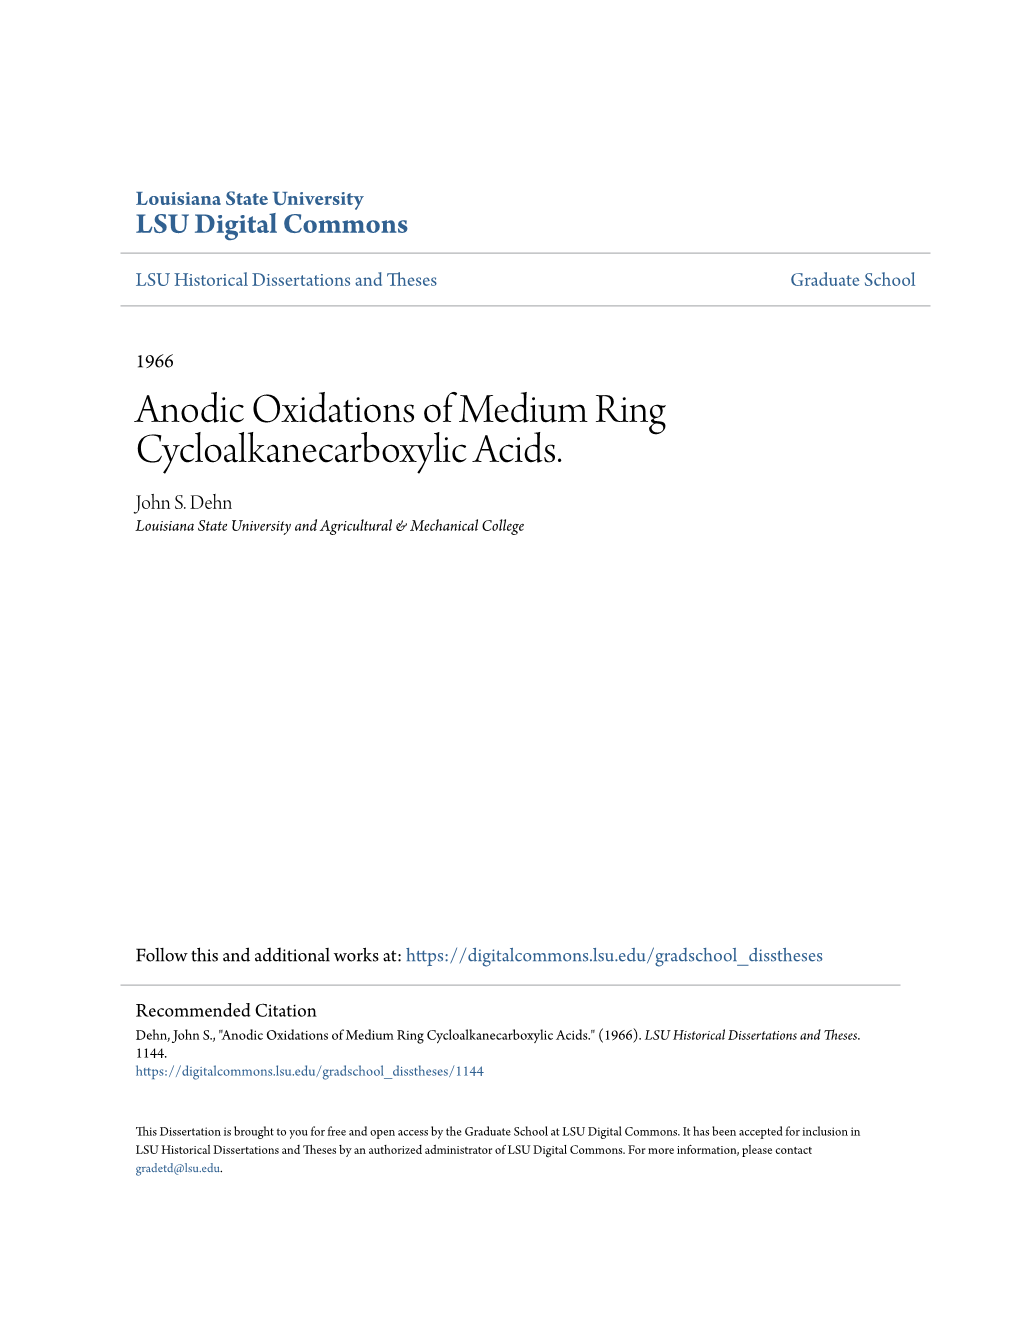 Anodic Oxidations of Medium Ring Cycloalkanecarboxylic Acids. John S